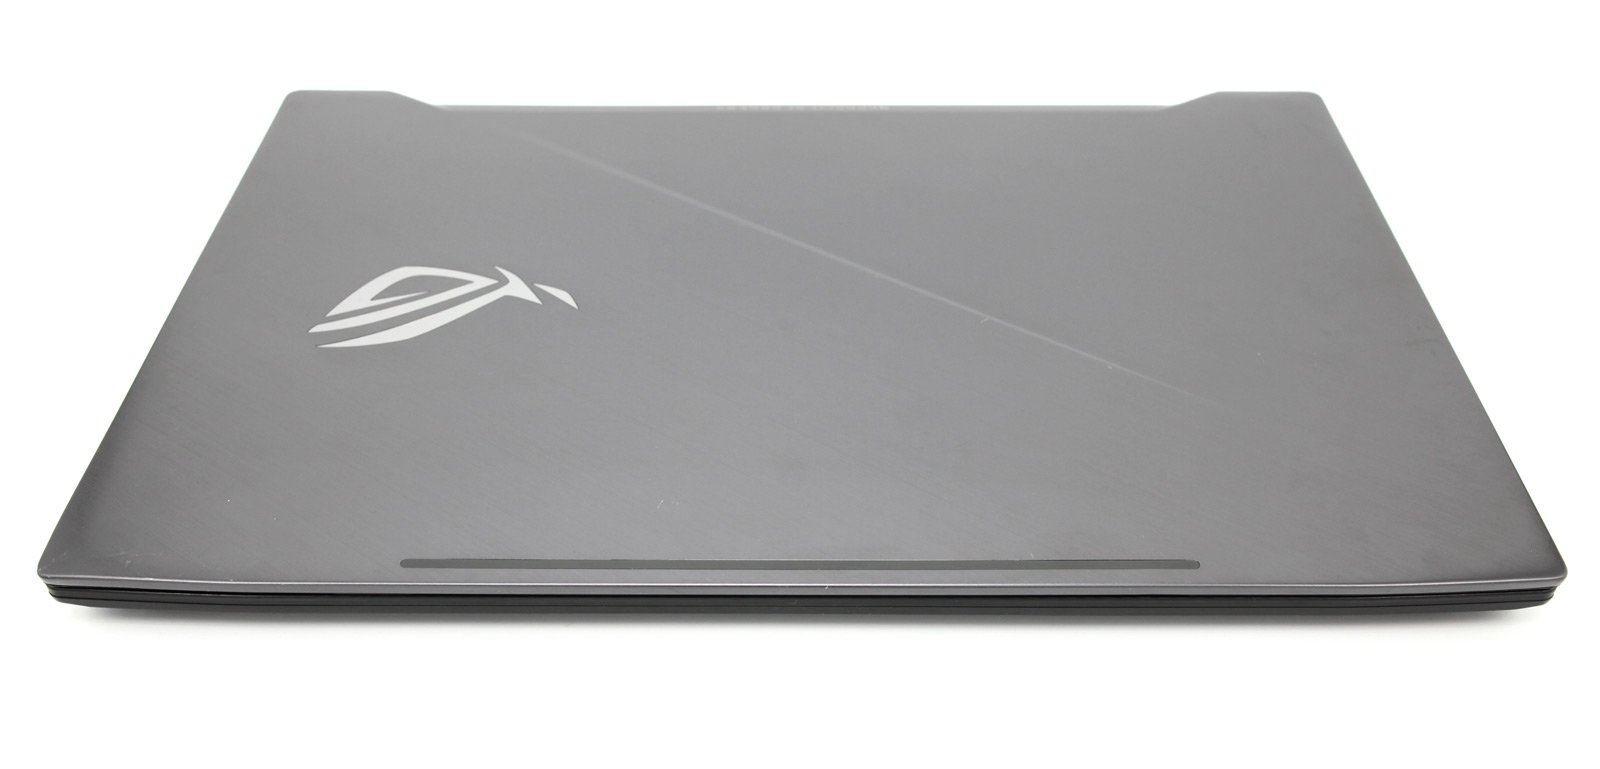 ASUS ROG GL703GM 17" Gaming Laptop: 256GB+1TB, GTX 1060, Core i7-8750H, 16GB RAM - CruiseTech